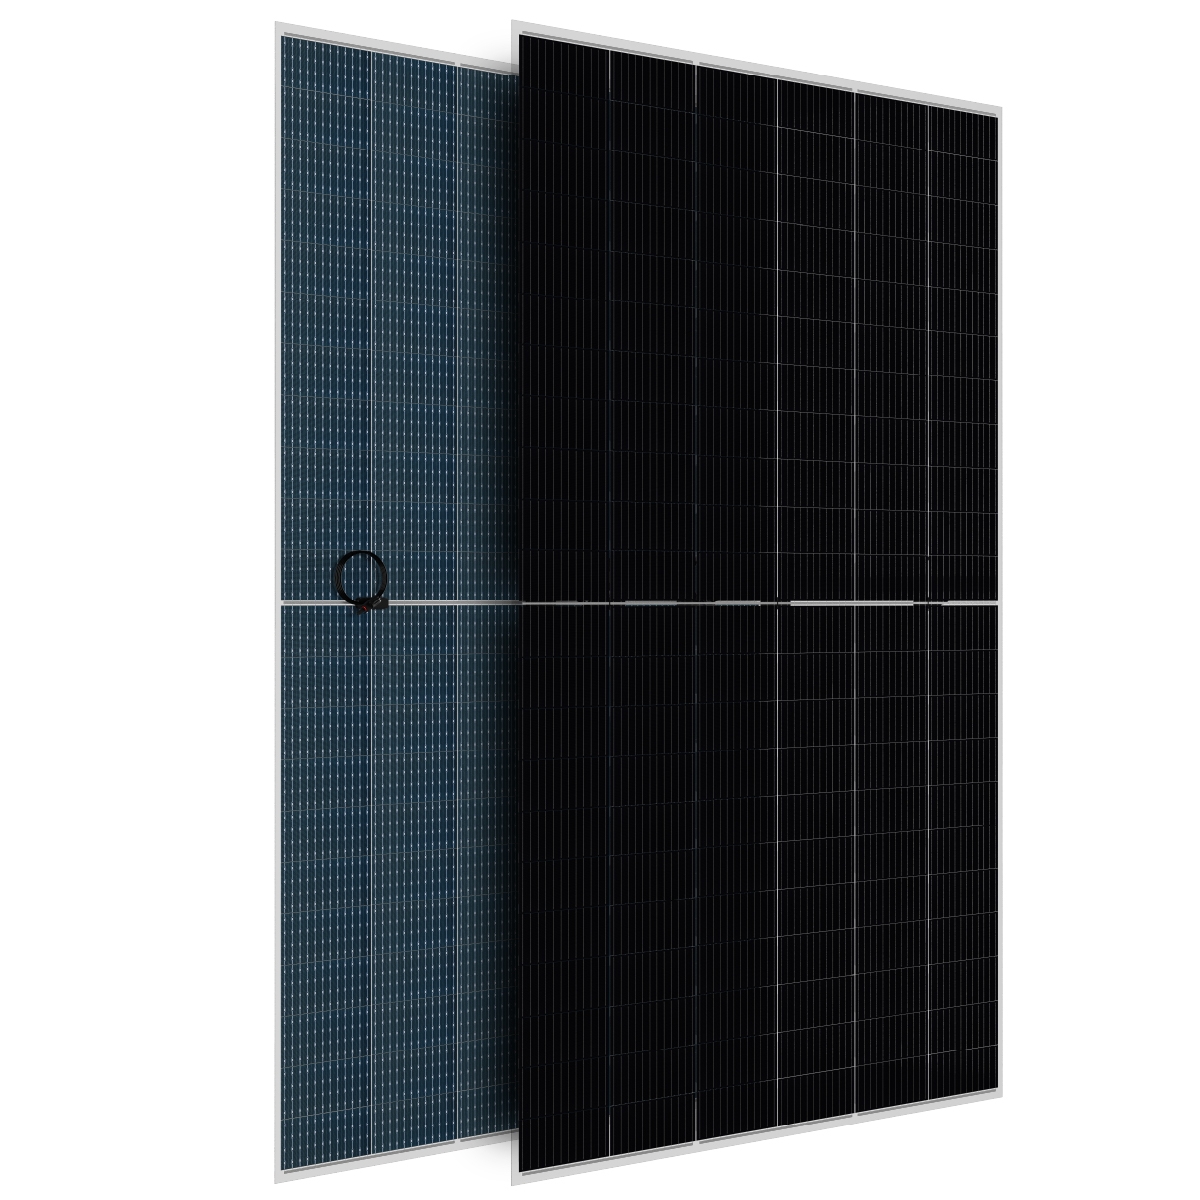 TommaTech 655Wp 132PMB M12 HC-MB G2G Solar Panel